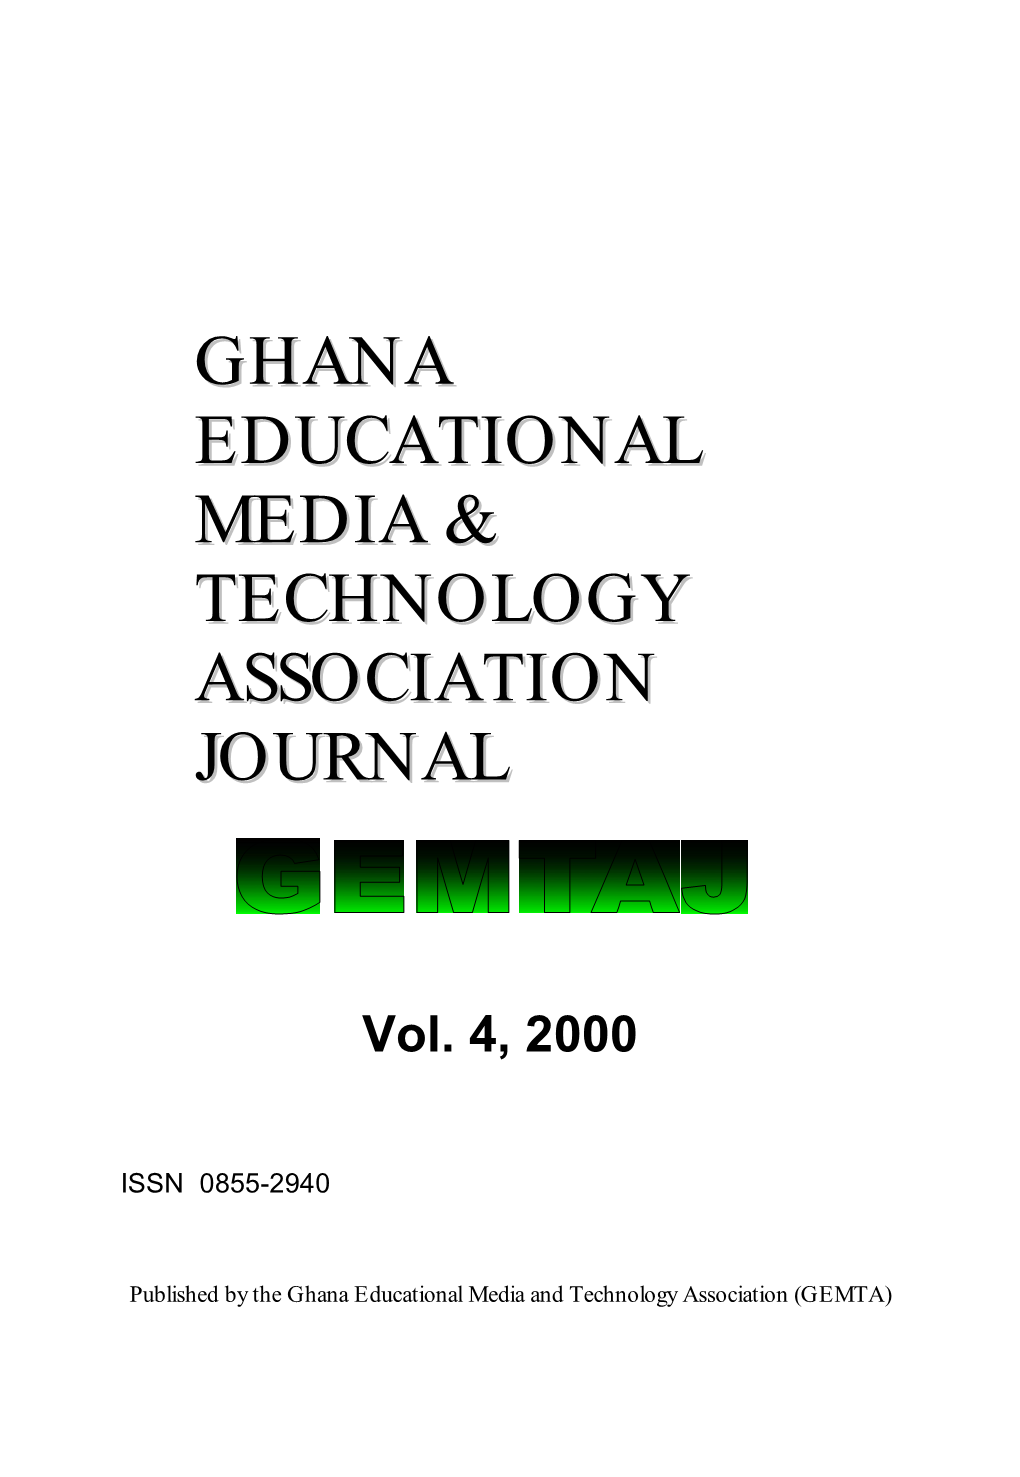 Ghana Educational Media & Technology Association